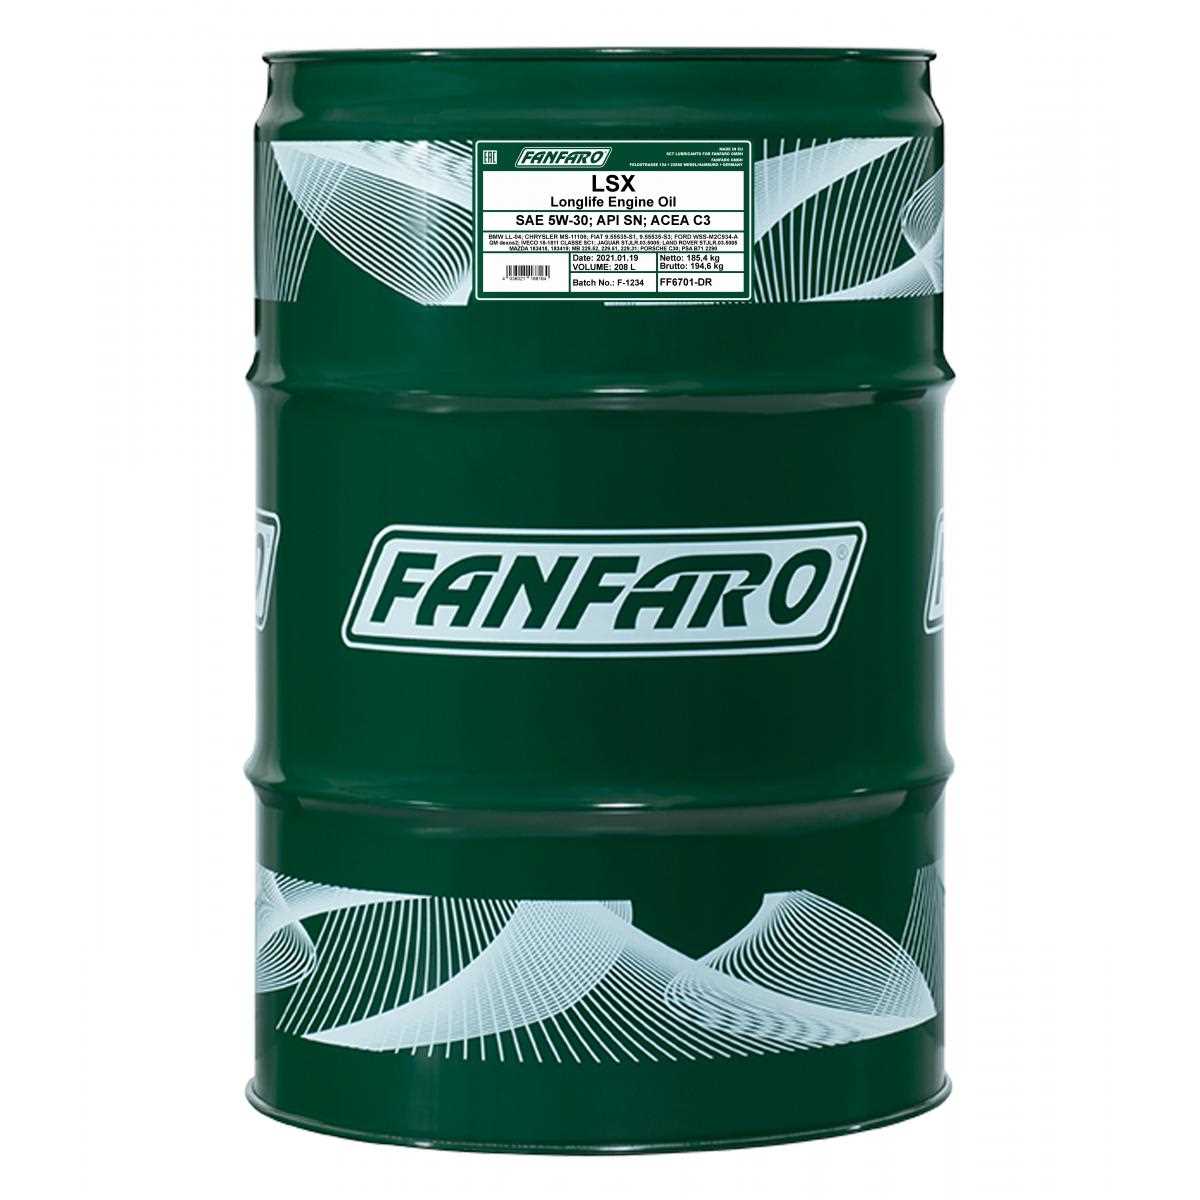 208 Liter FANFARO LSX 5W-30 API SN ACEA C3 Motoröl Expert Line Öl Oil